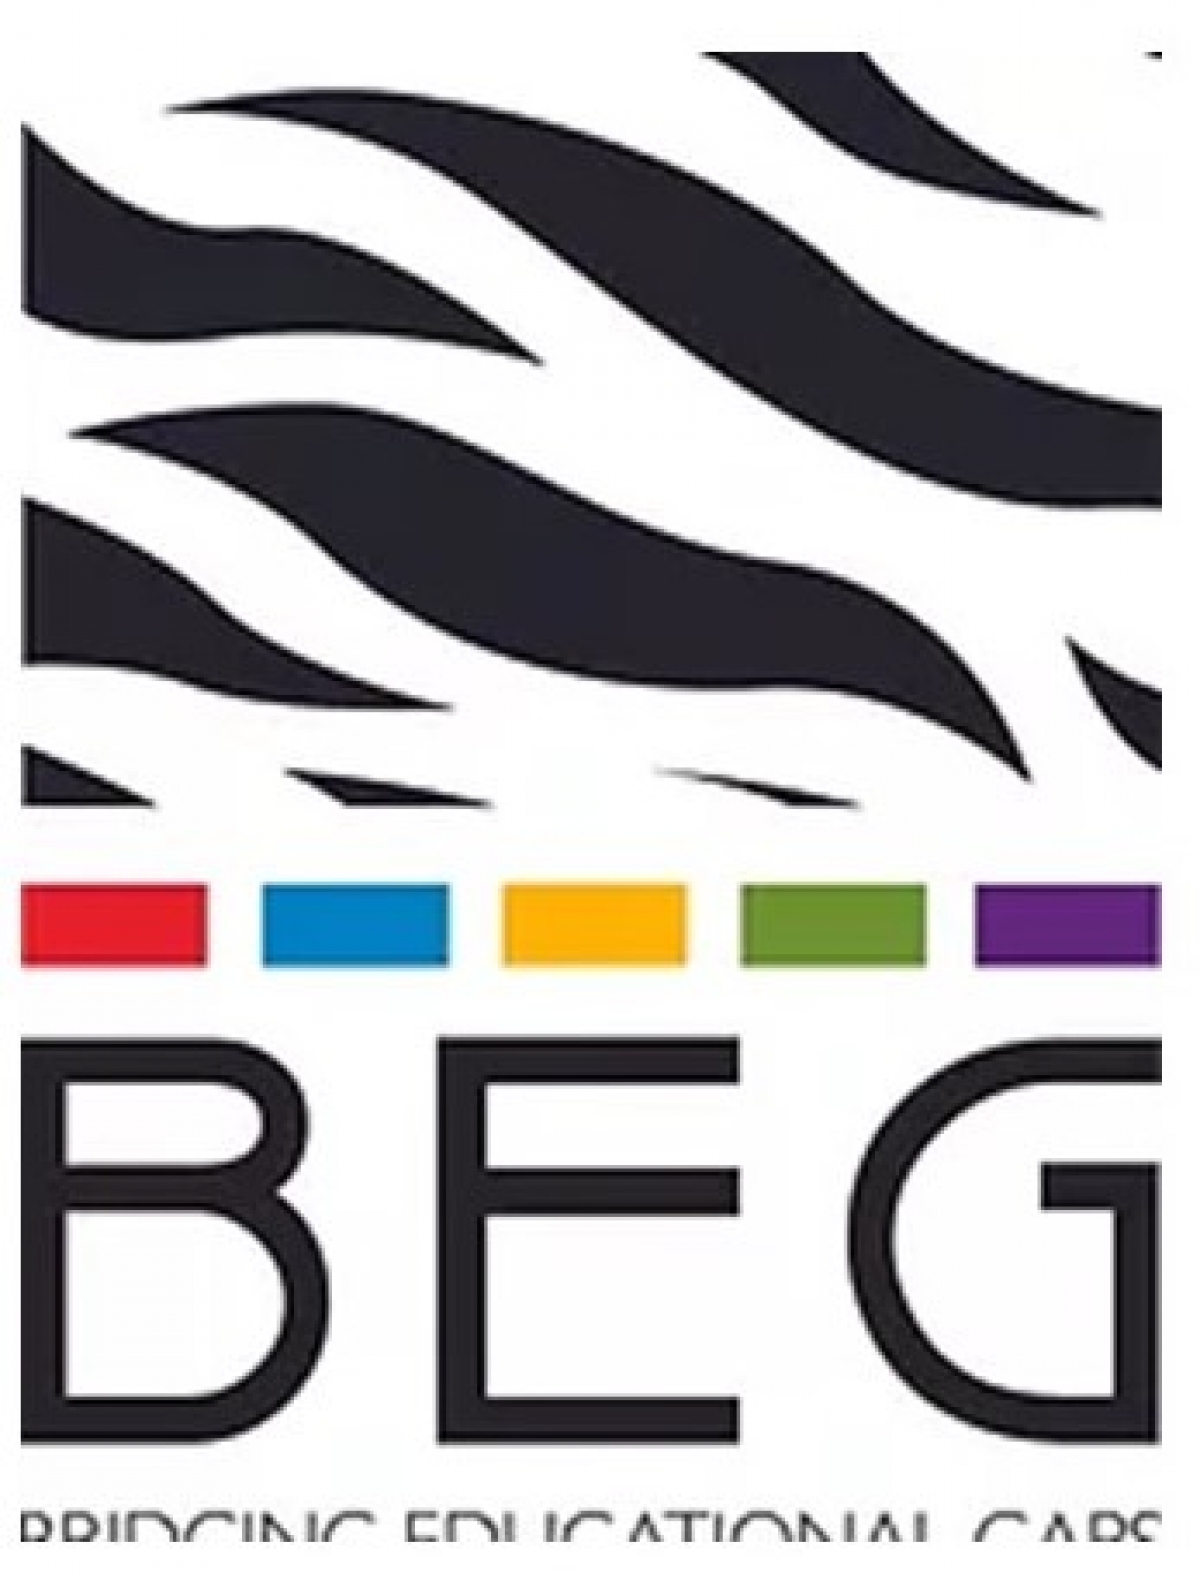 Bridging Educational Gaps- BEGCharity eCards